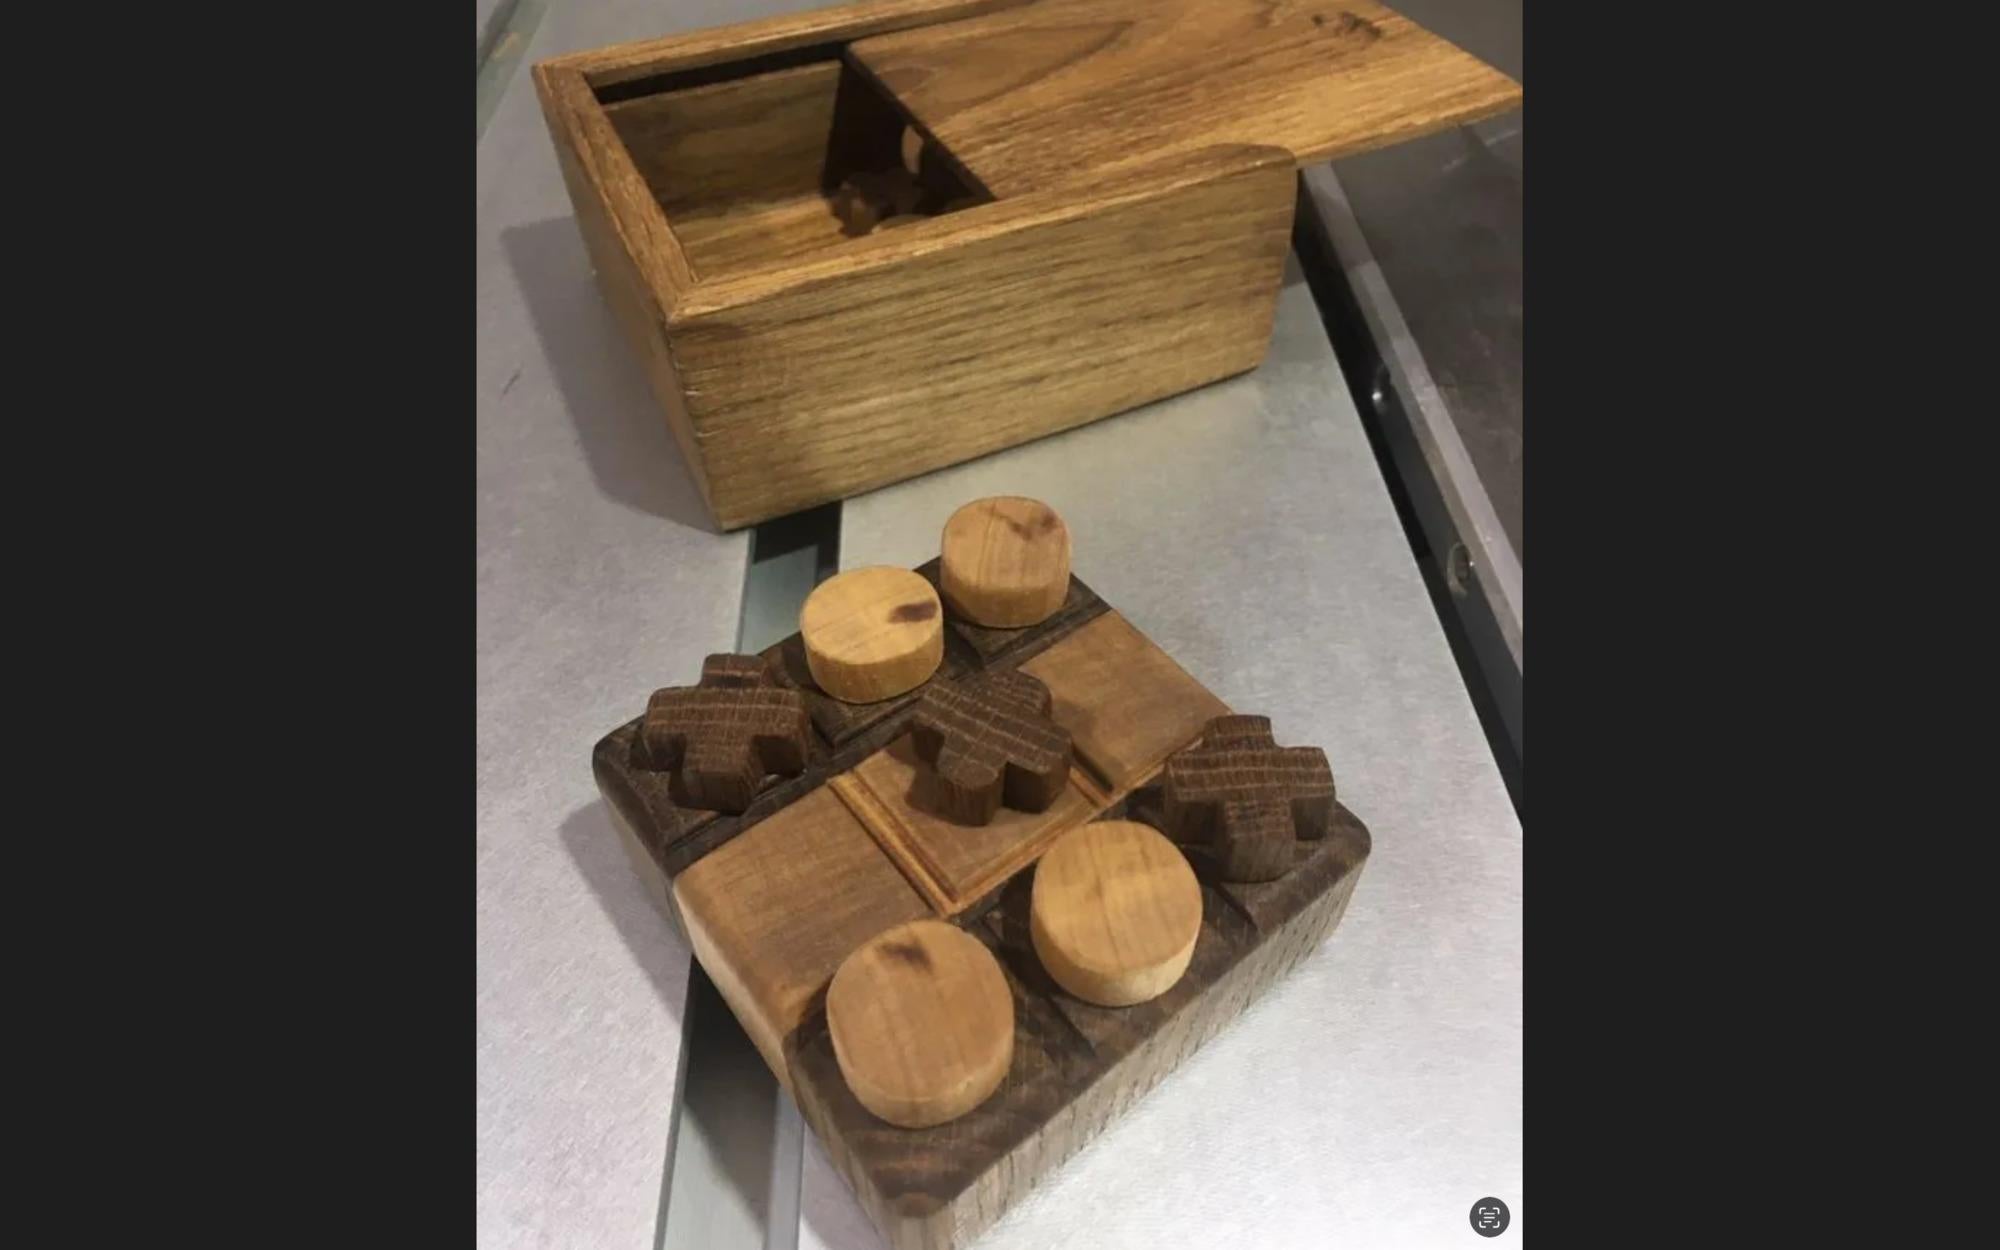 Contemporary Tic-tac-toe Game in a Box. Oak Material Handmade